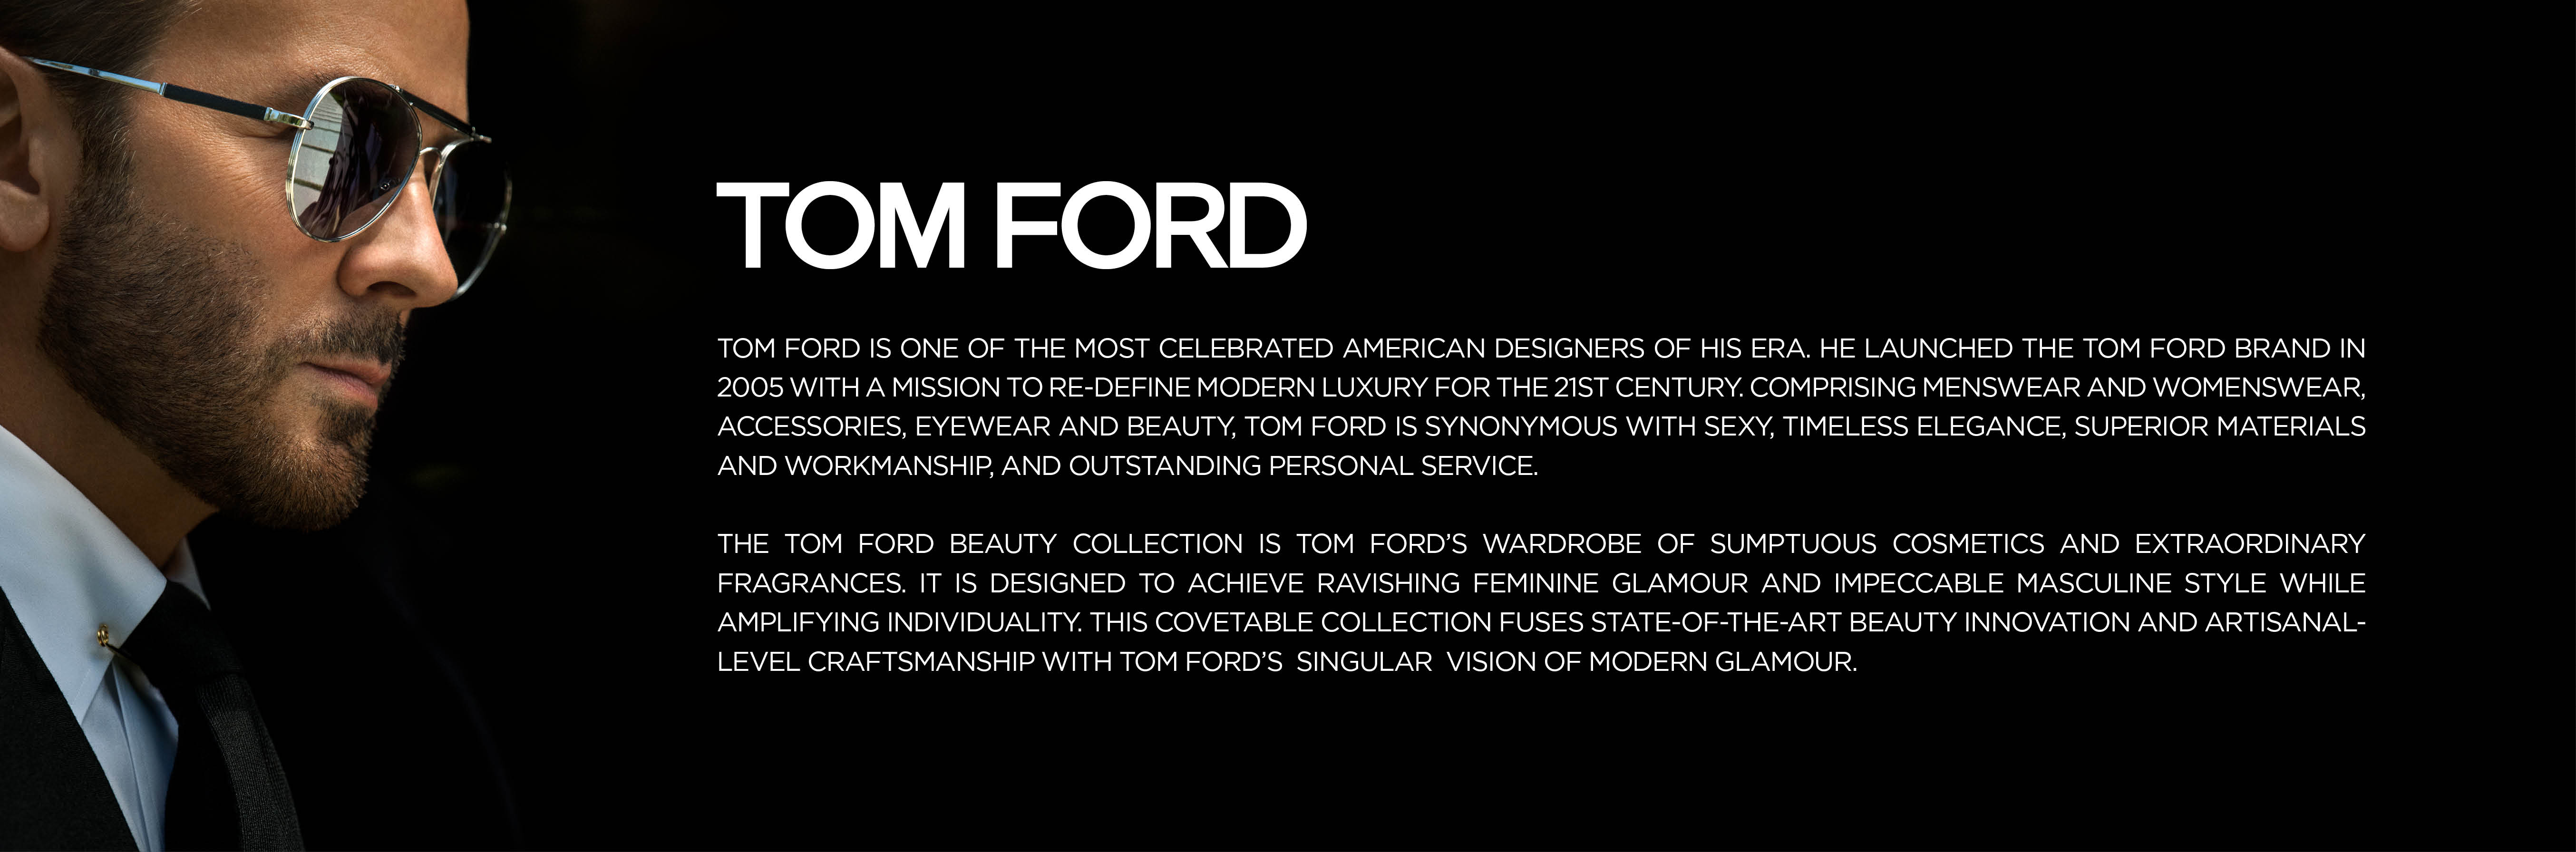 About Tom Ford | iShopChangi